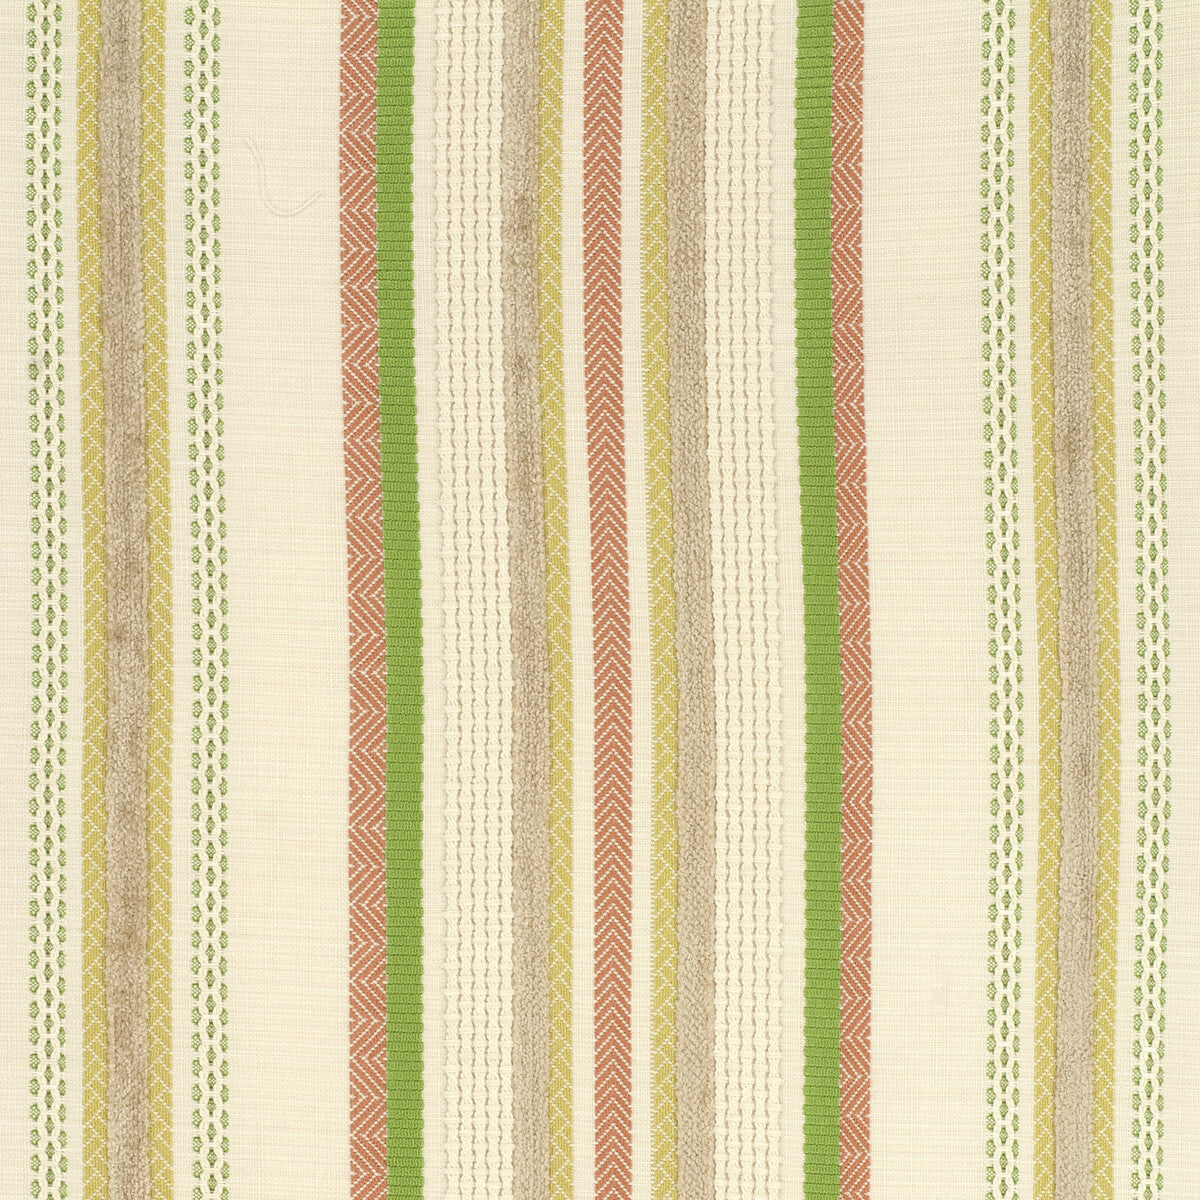 Kravet Design fabric in 34727-1612 color - pattern 34727.1612.0 - by Kravet Design in the Gis collection